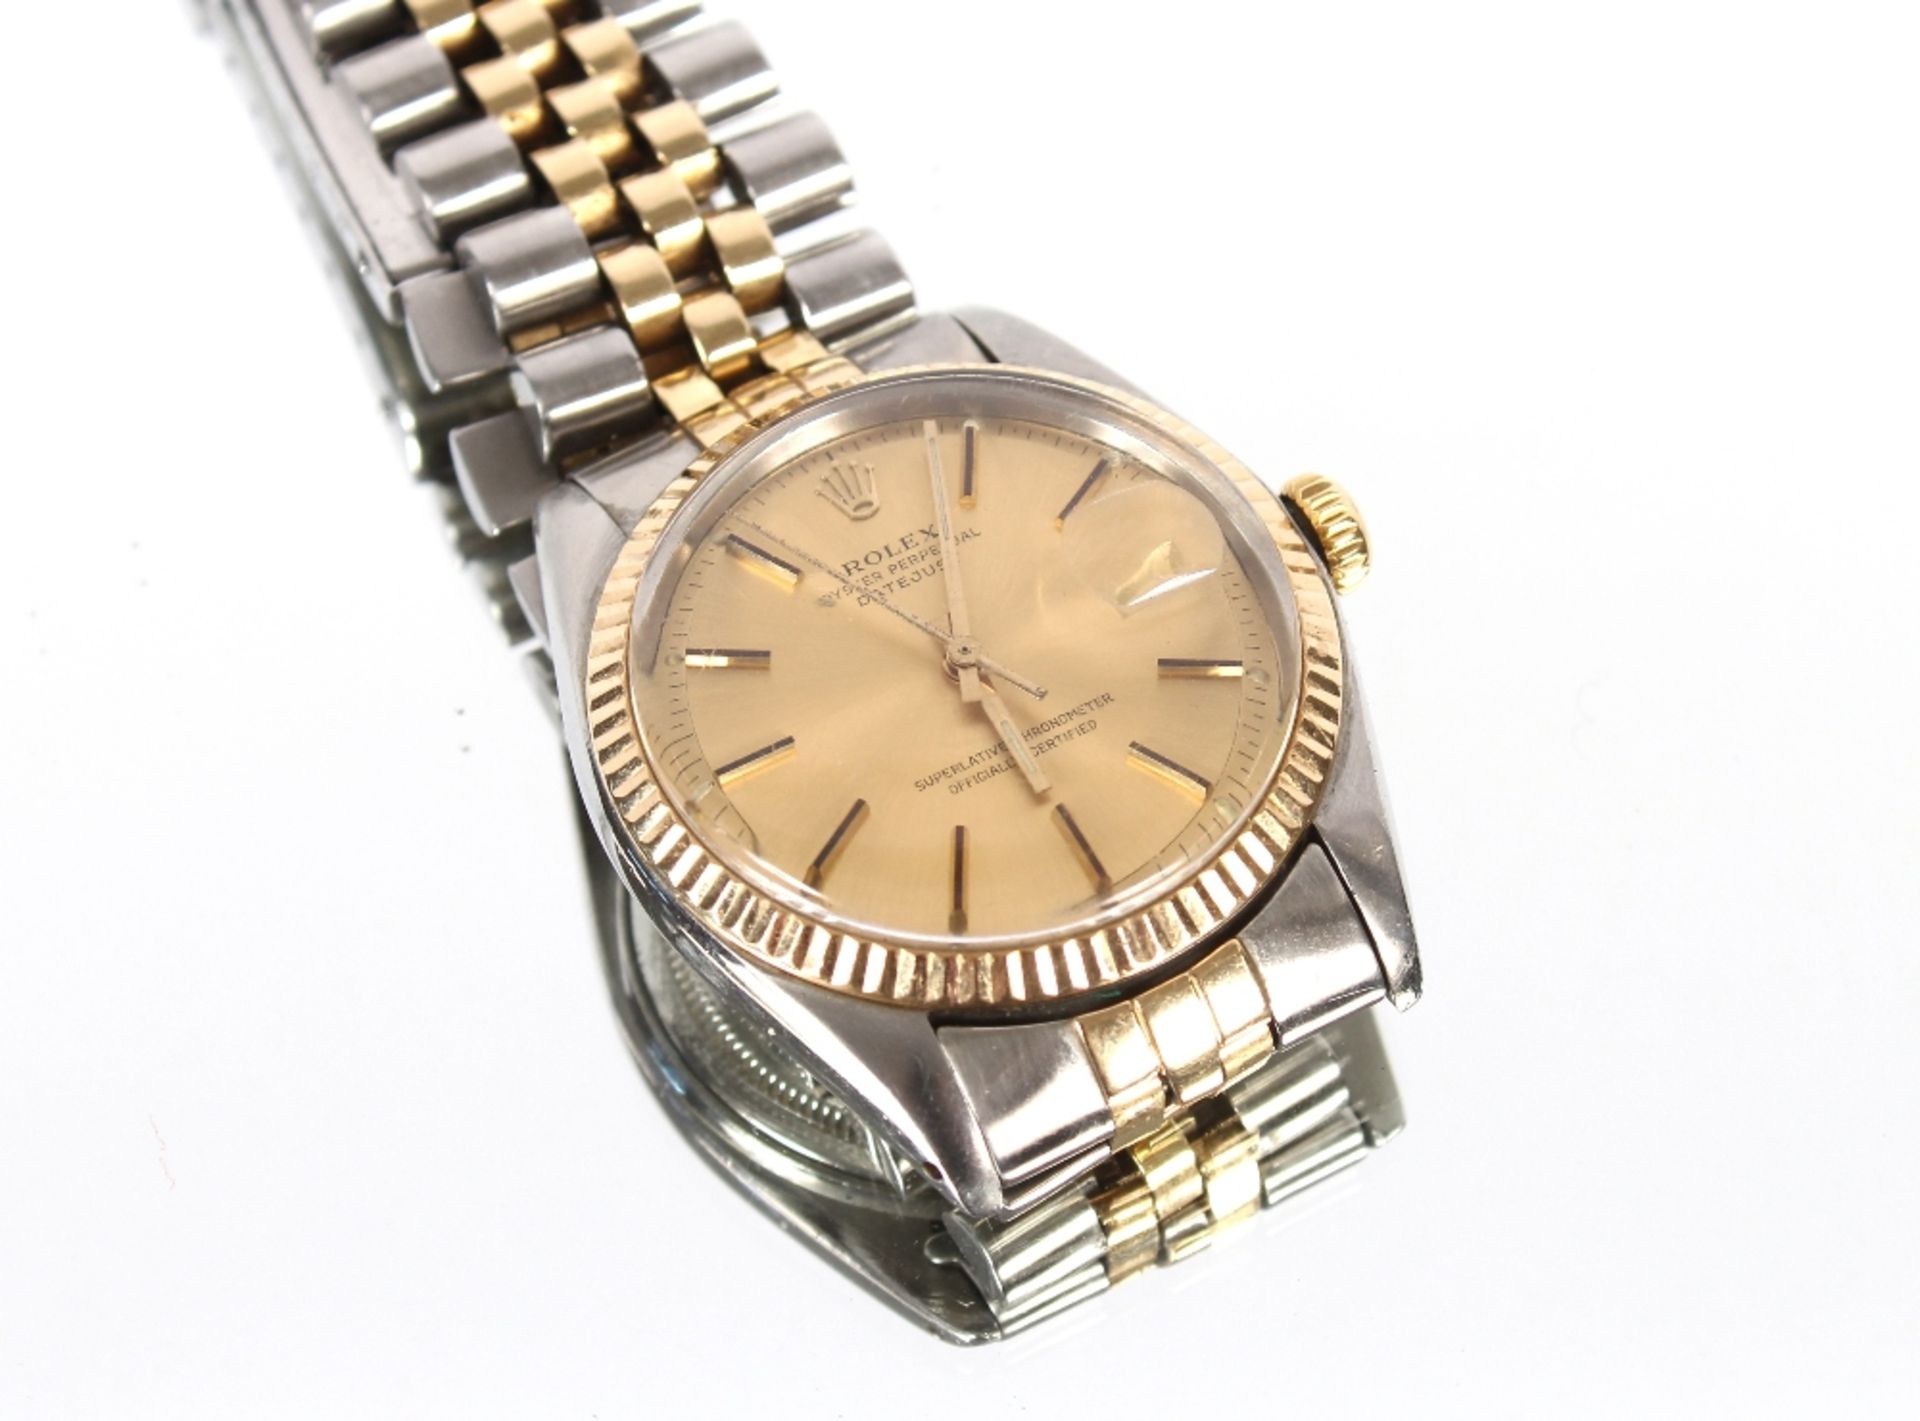 A Rolex Bi-Metallic date adjust Oyster Perpetual wrist watch - Image 3 of 9